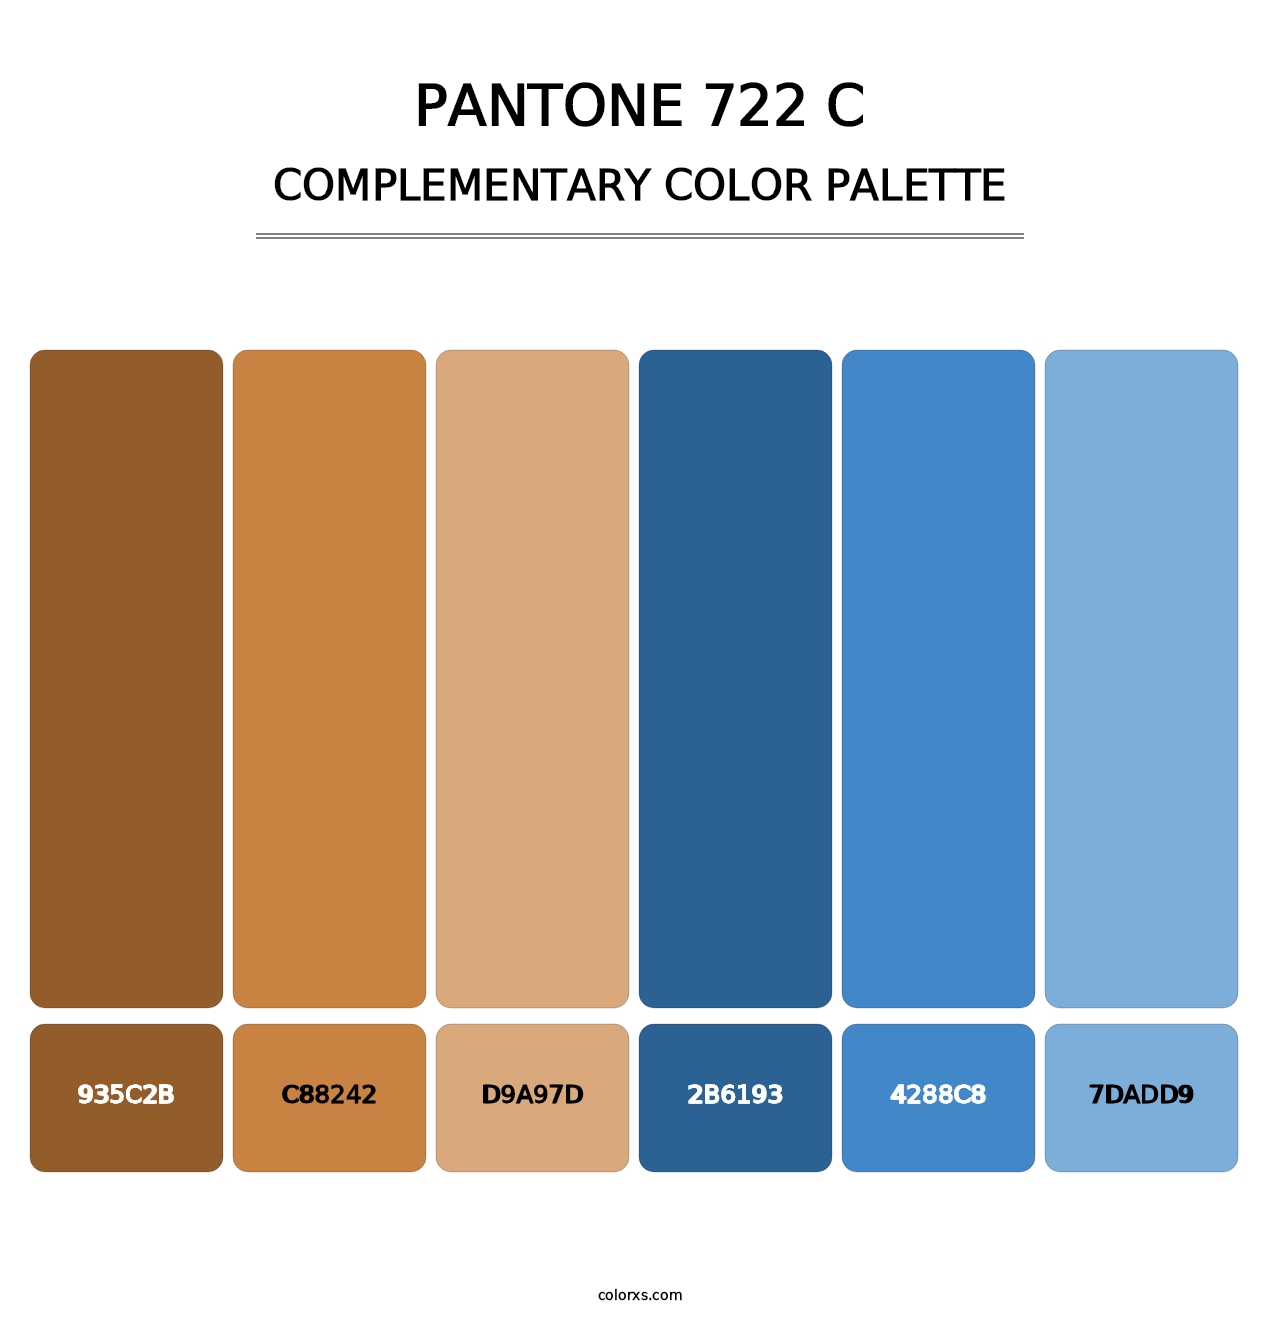 PANTONE 722 C - Complementary Color Palette